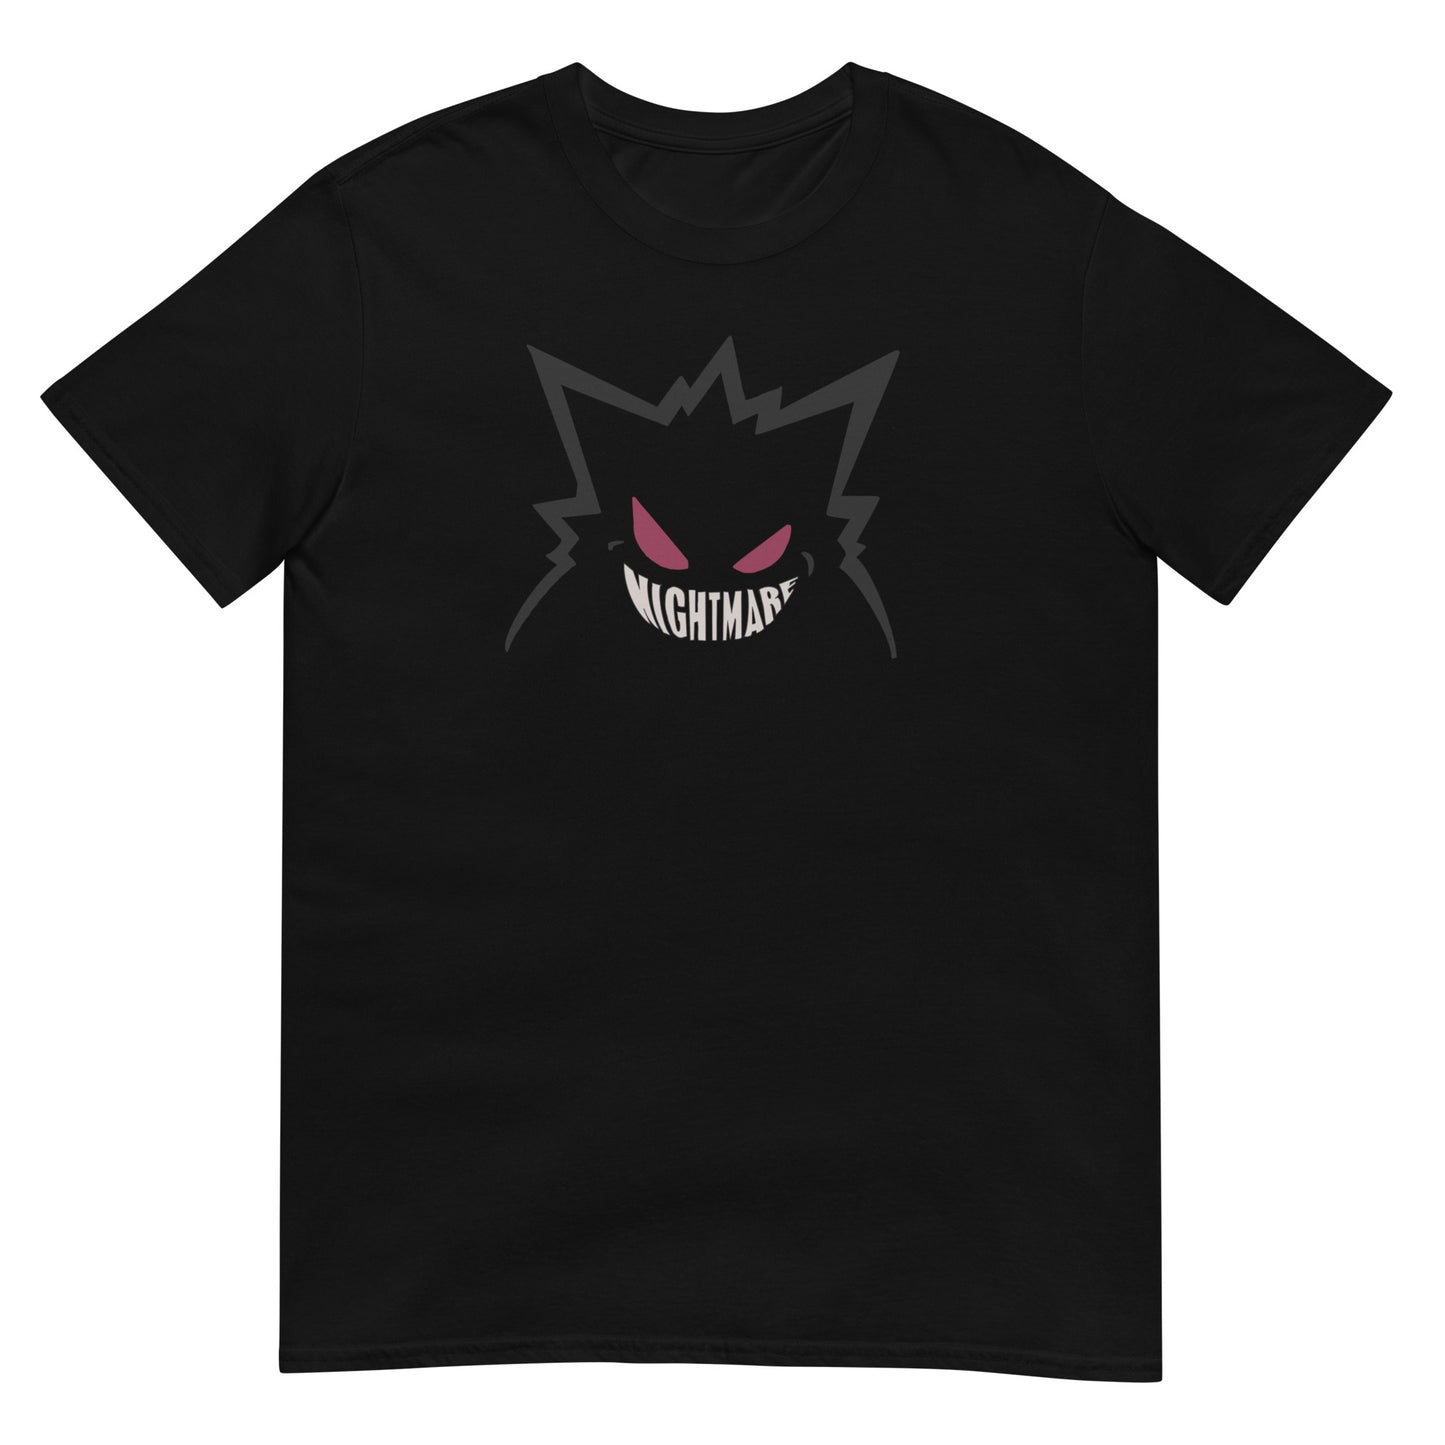 Pokémon Nightmare Short-Sleeve Unisex T-Shirt.